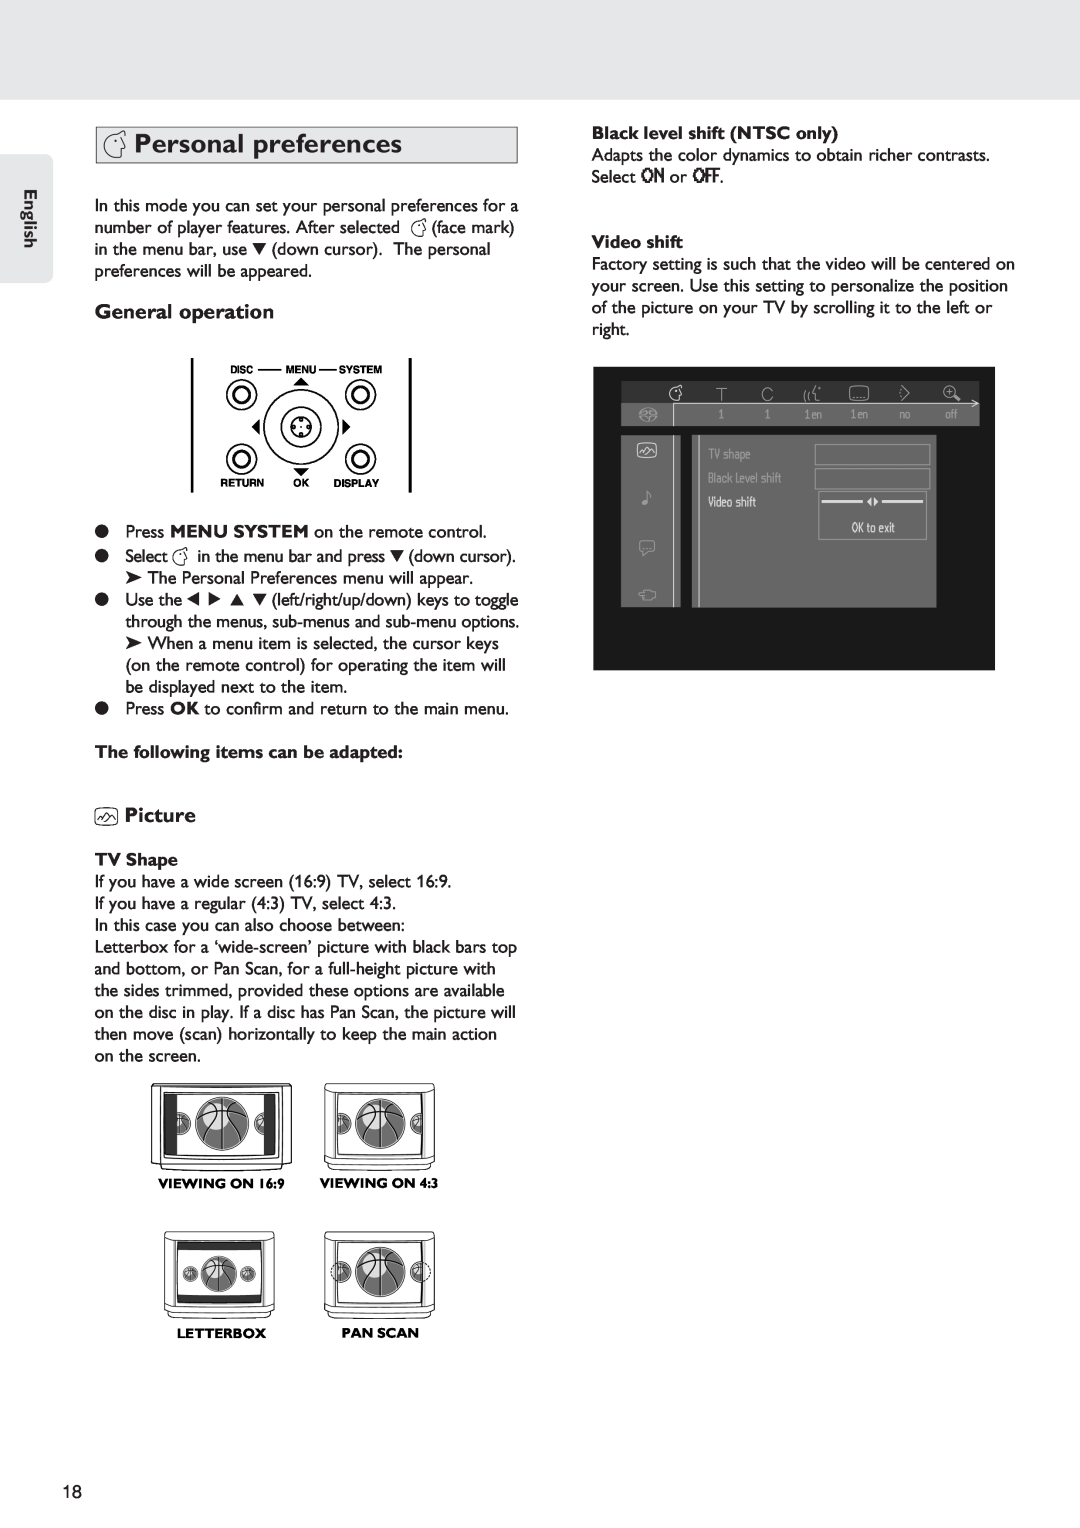 Marantz SA-12S1 manual TVshape, V Personal preferences, BlackLevelshift, Videoshift, preferences will be appeared, TV Shape 